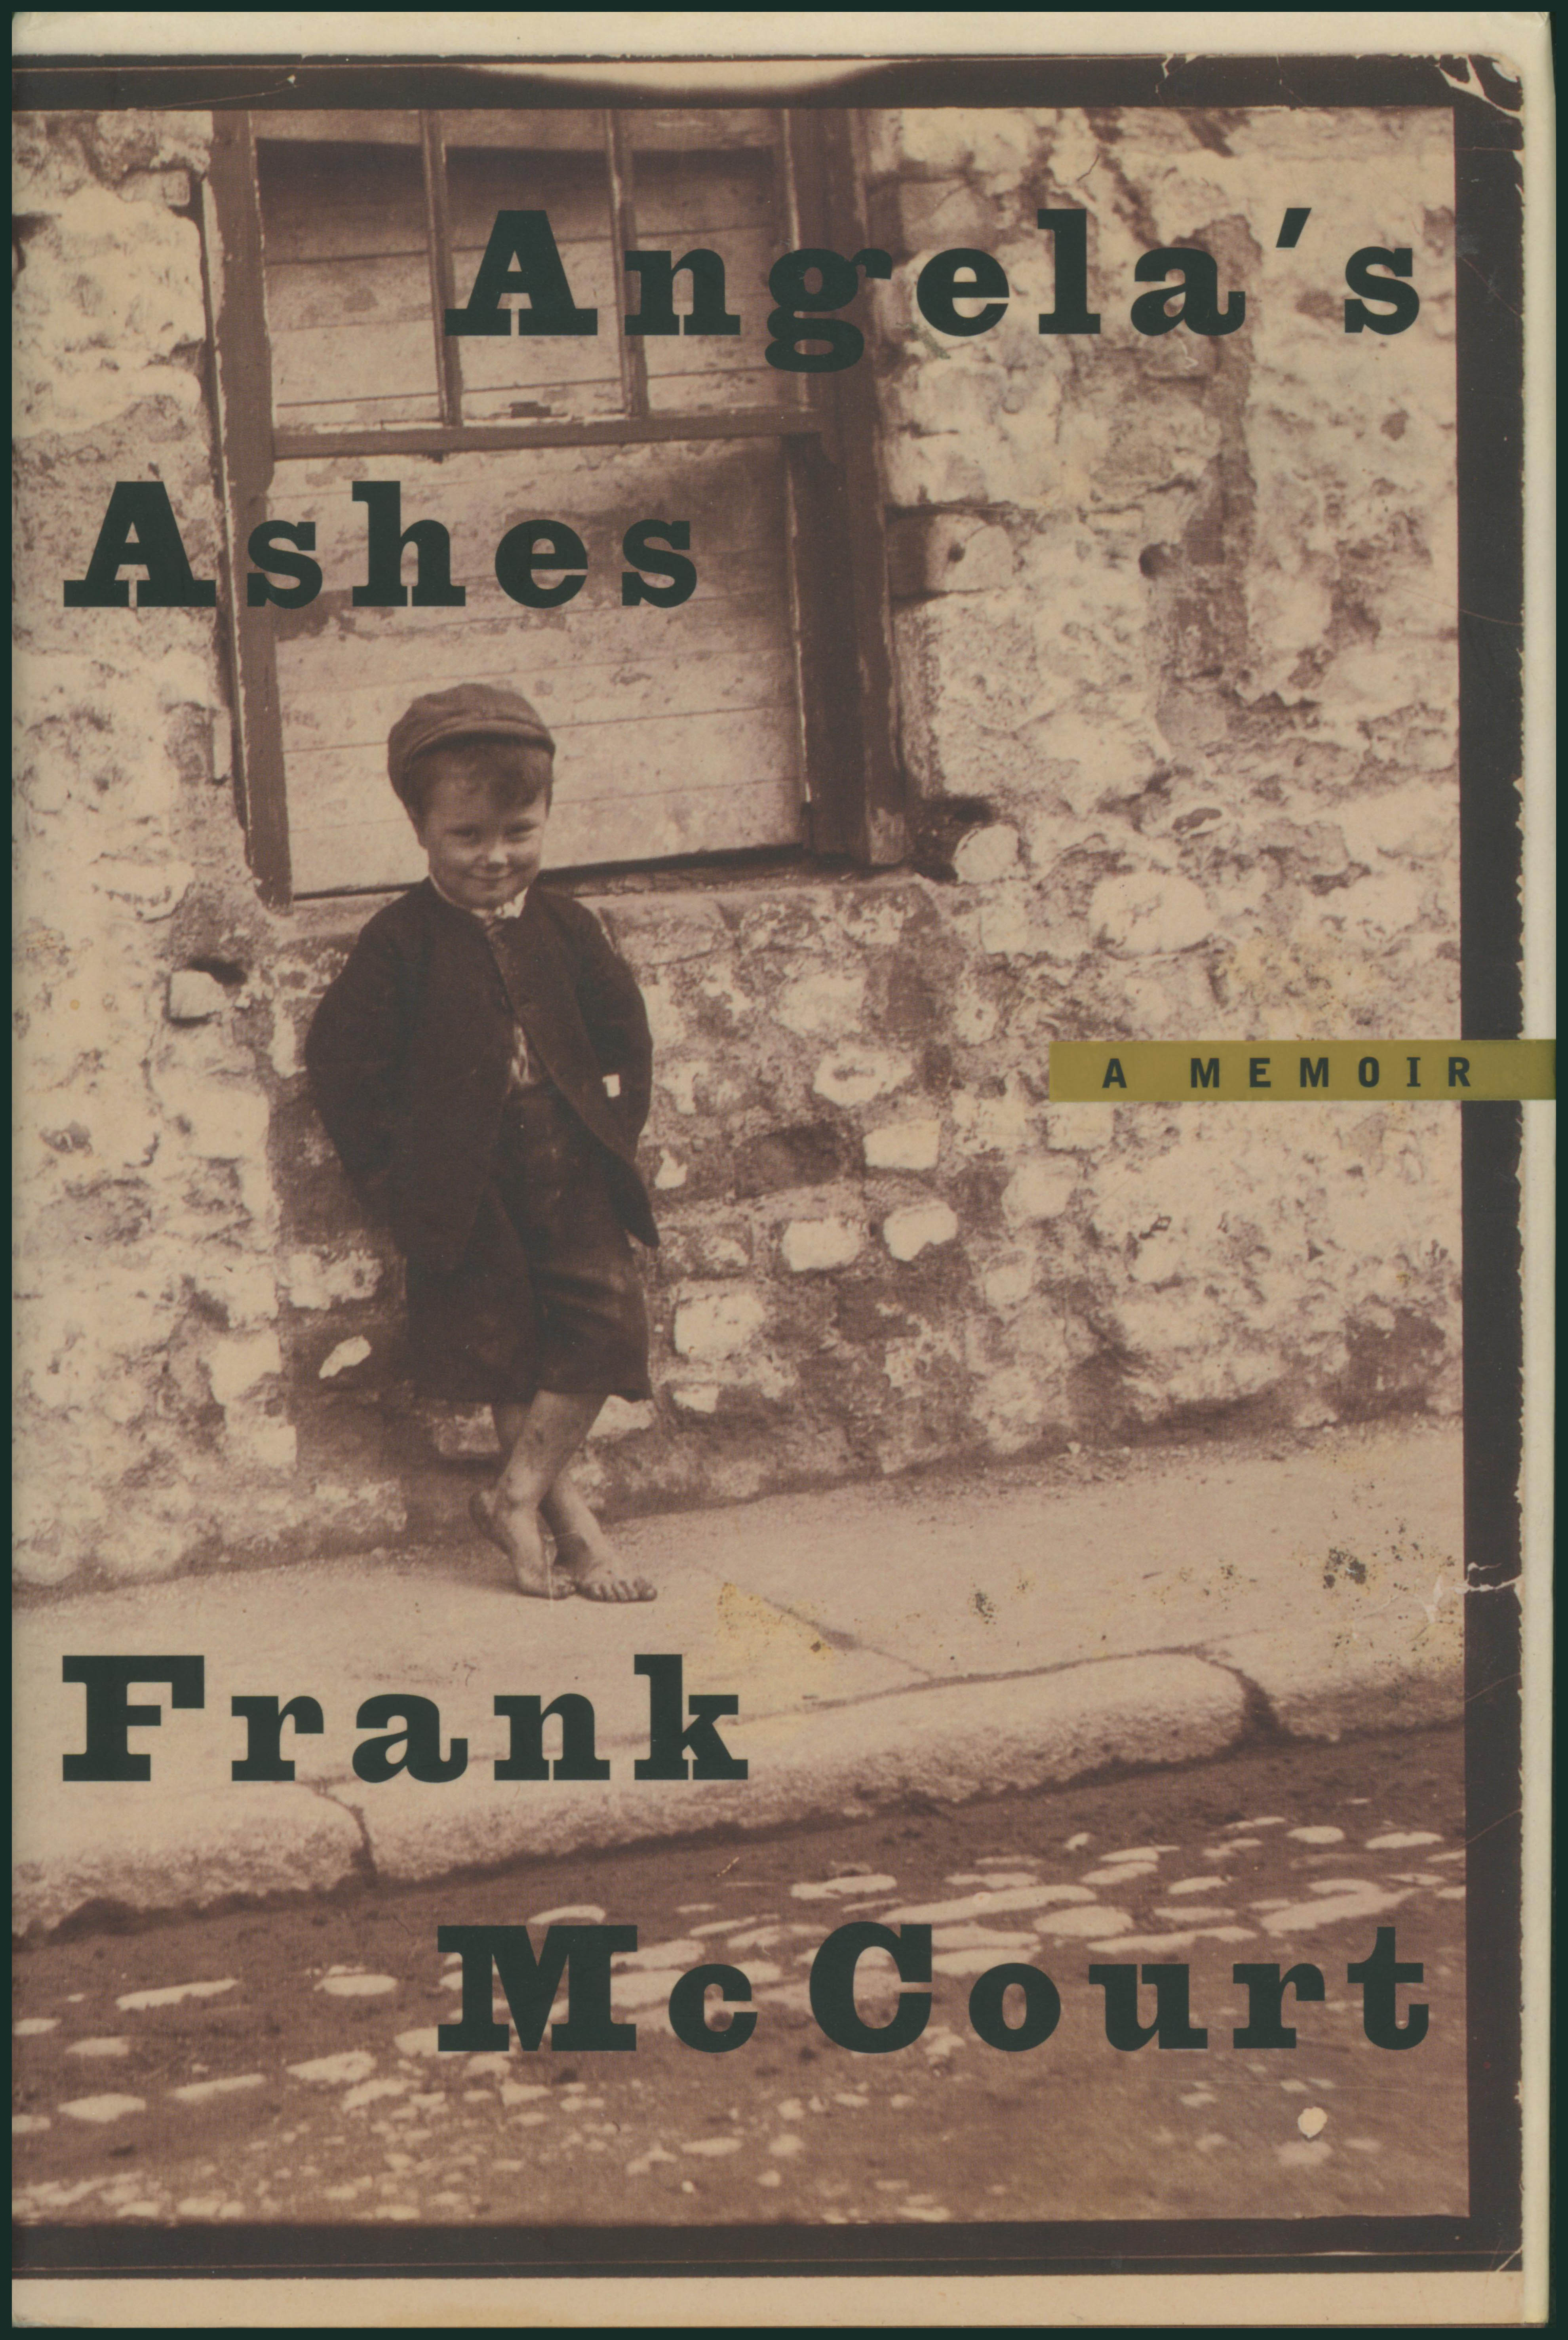 McCourt, Frank - Angela's Ashes (the Frank Mccourt Memoirs)